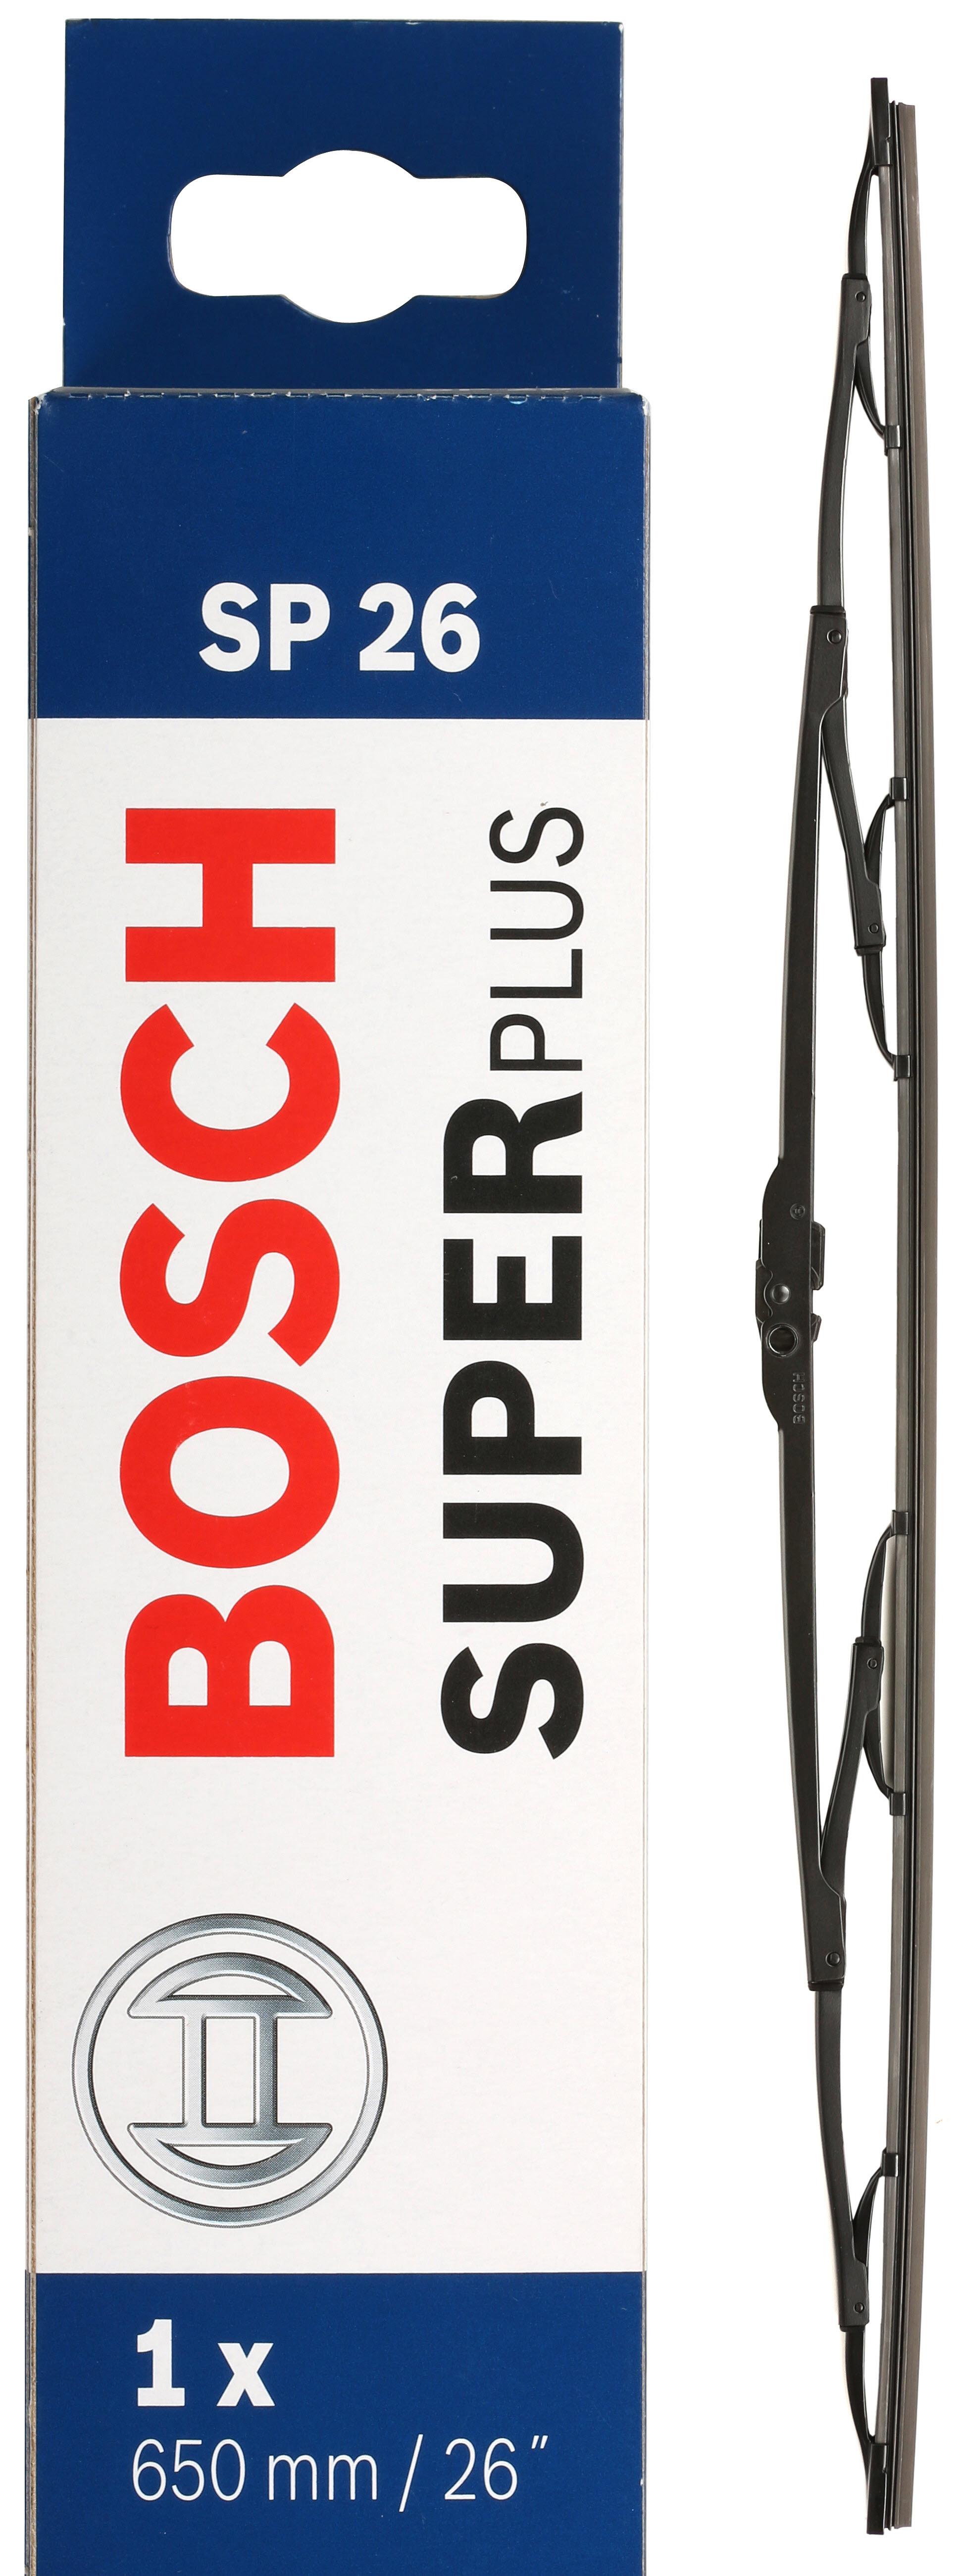 Bosch Sp26 Wiper Blade - Single